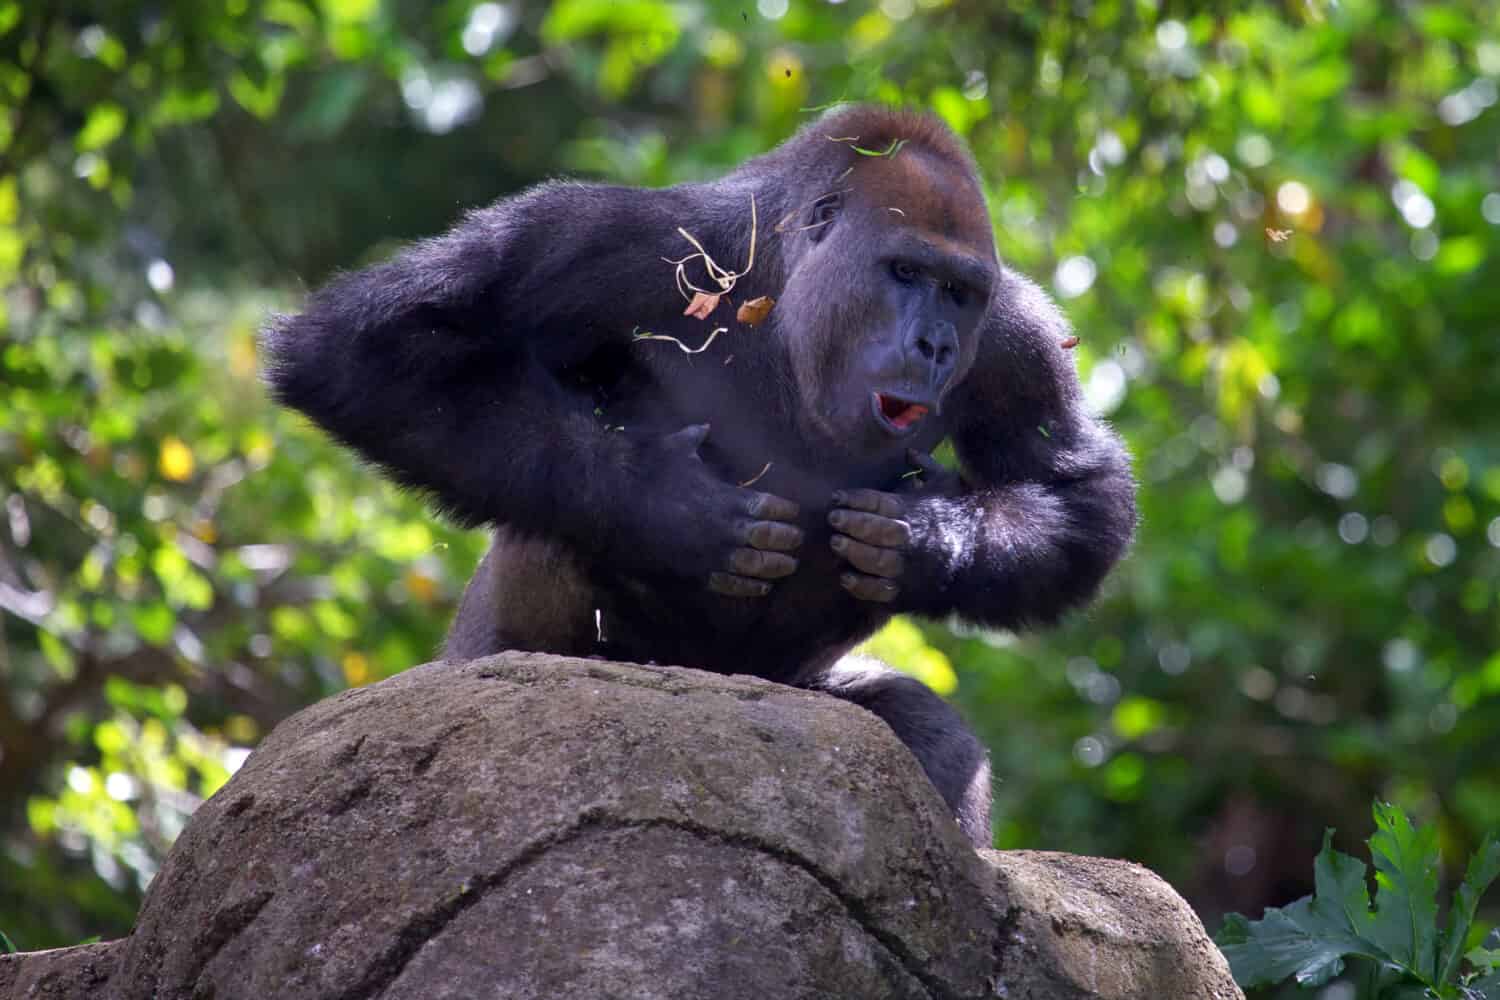 Silverback gorilla chest beating